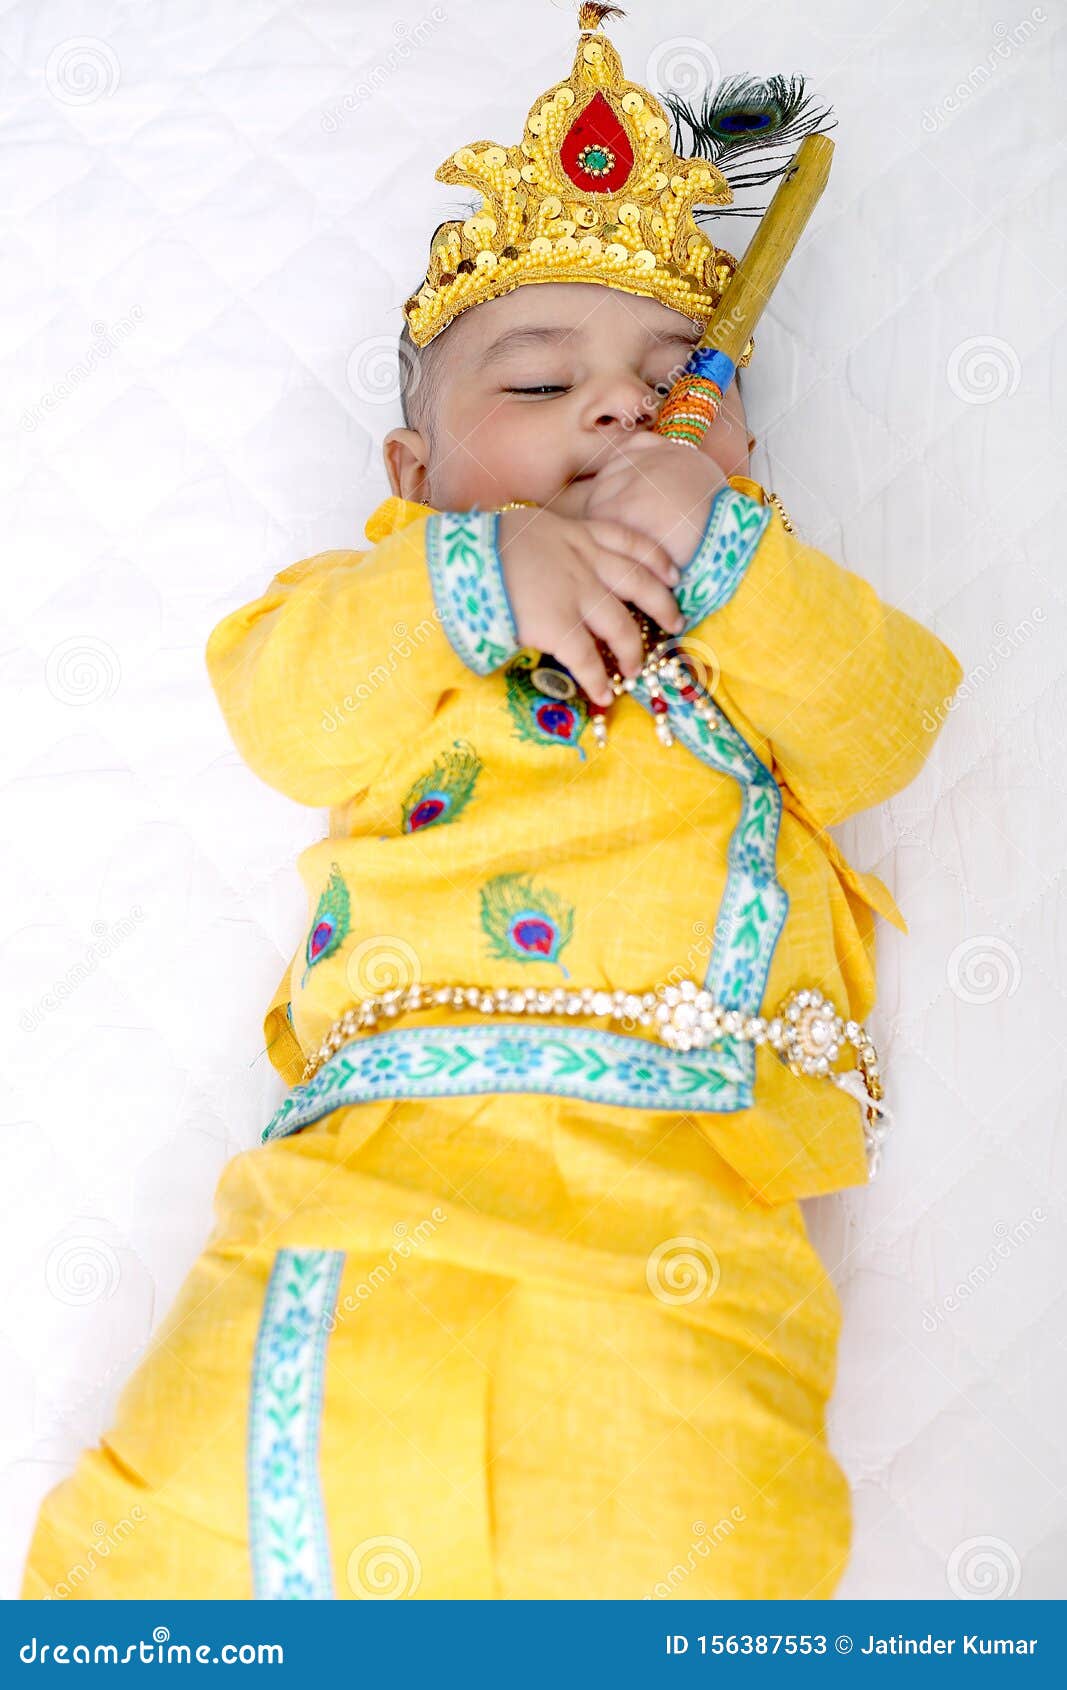 Picture of Baby krishna. stock image. Image of children - 156387553